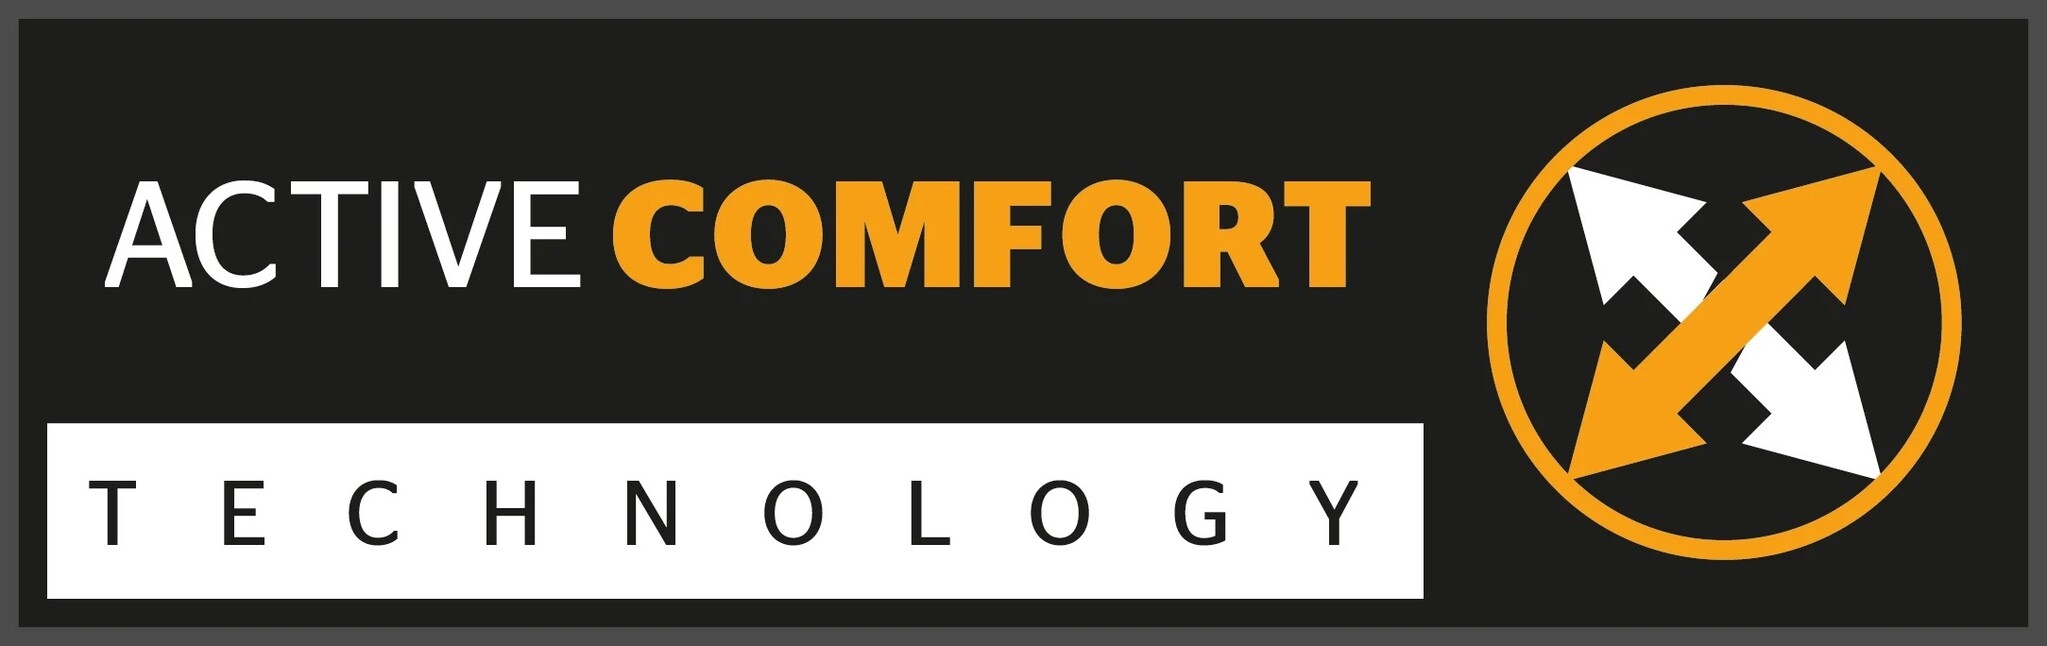 Active Comfort Technology logo